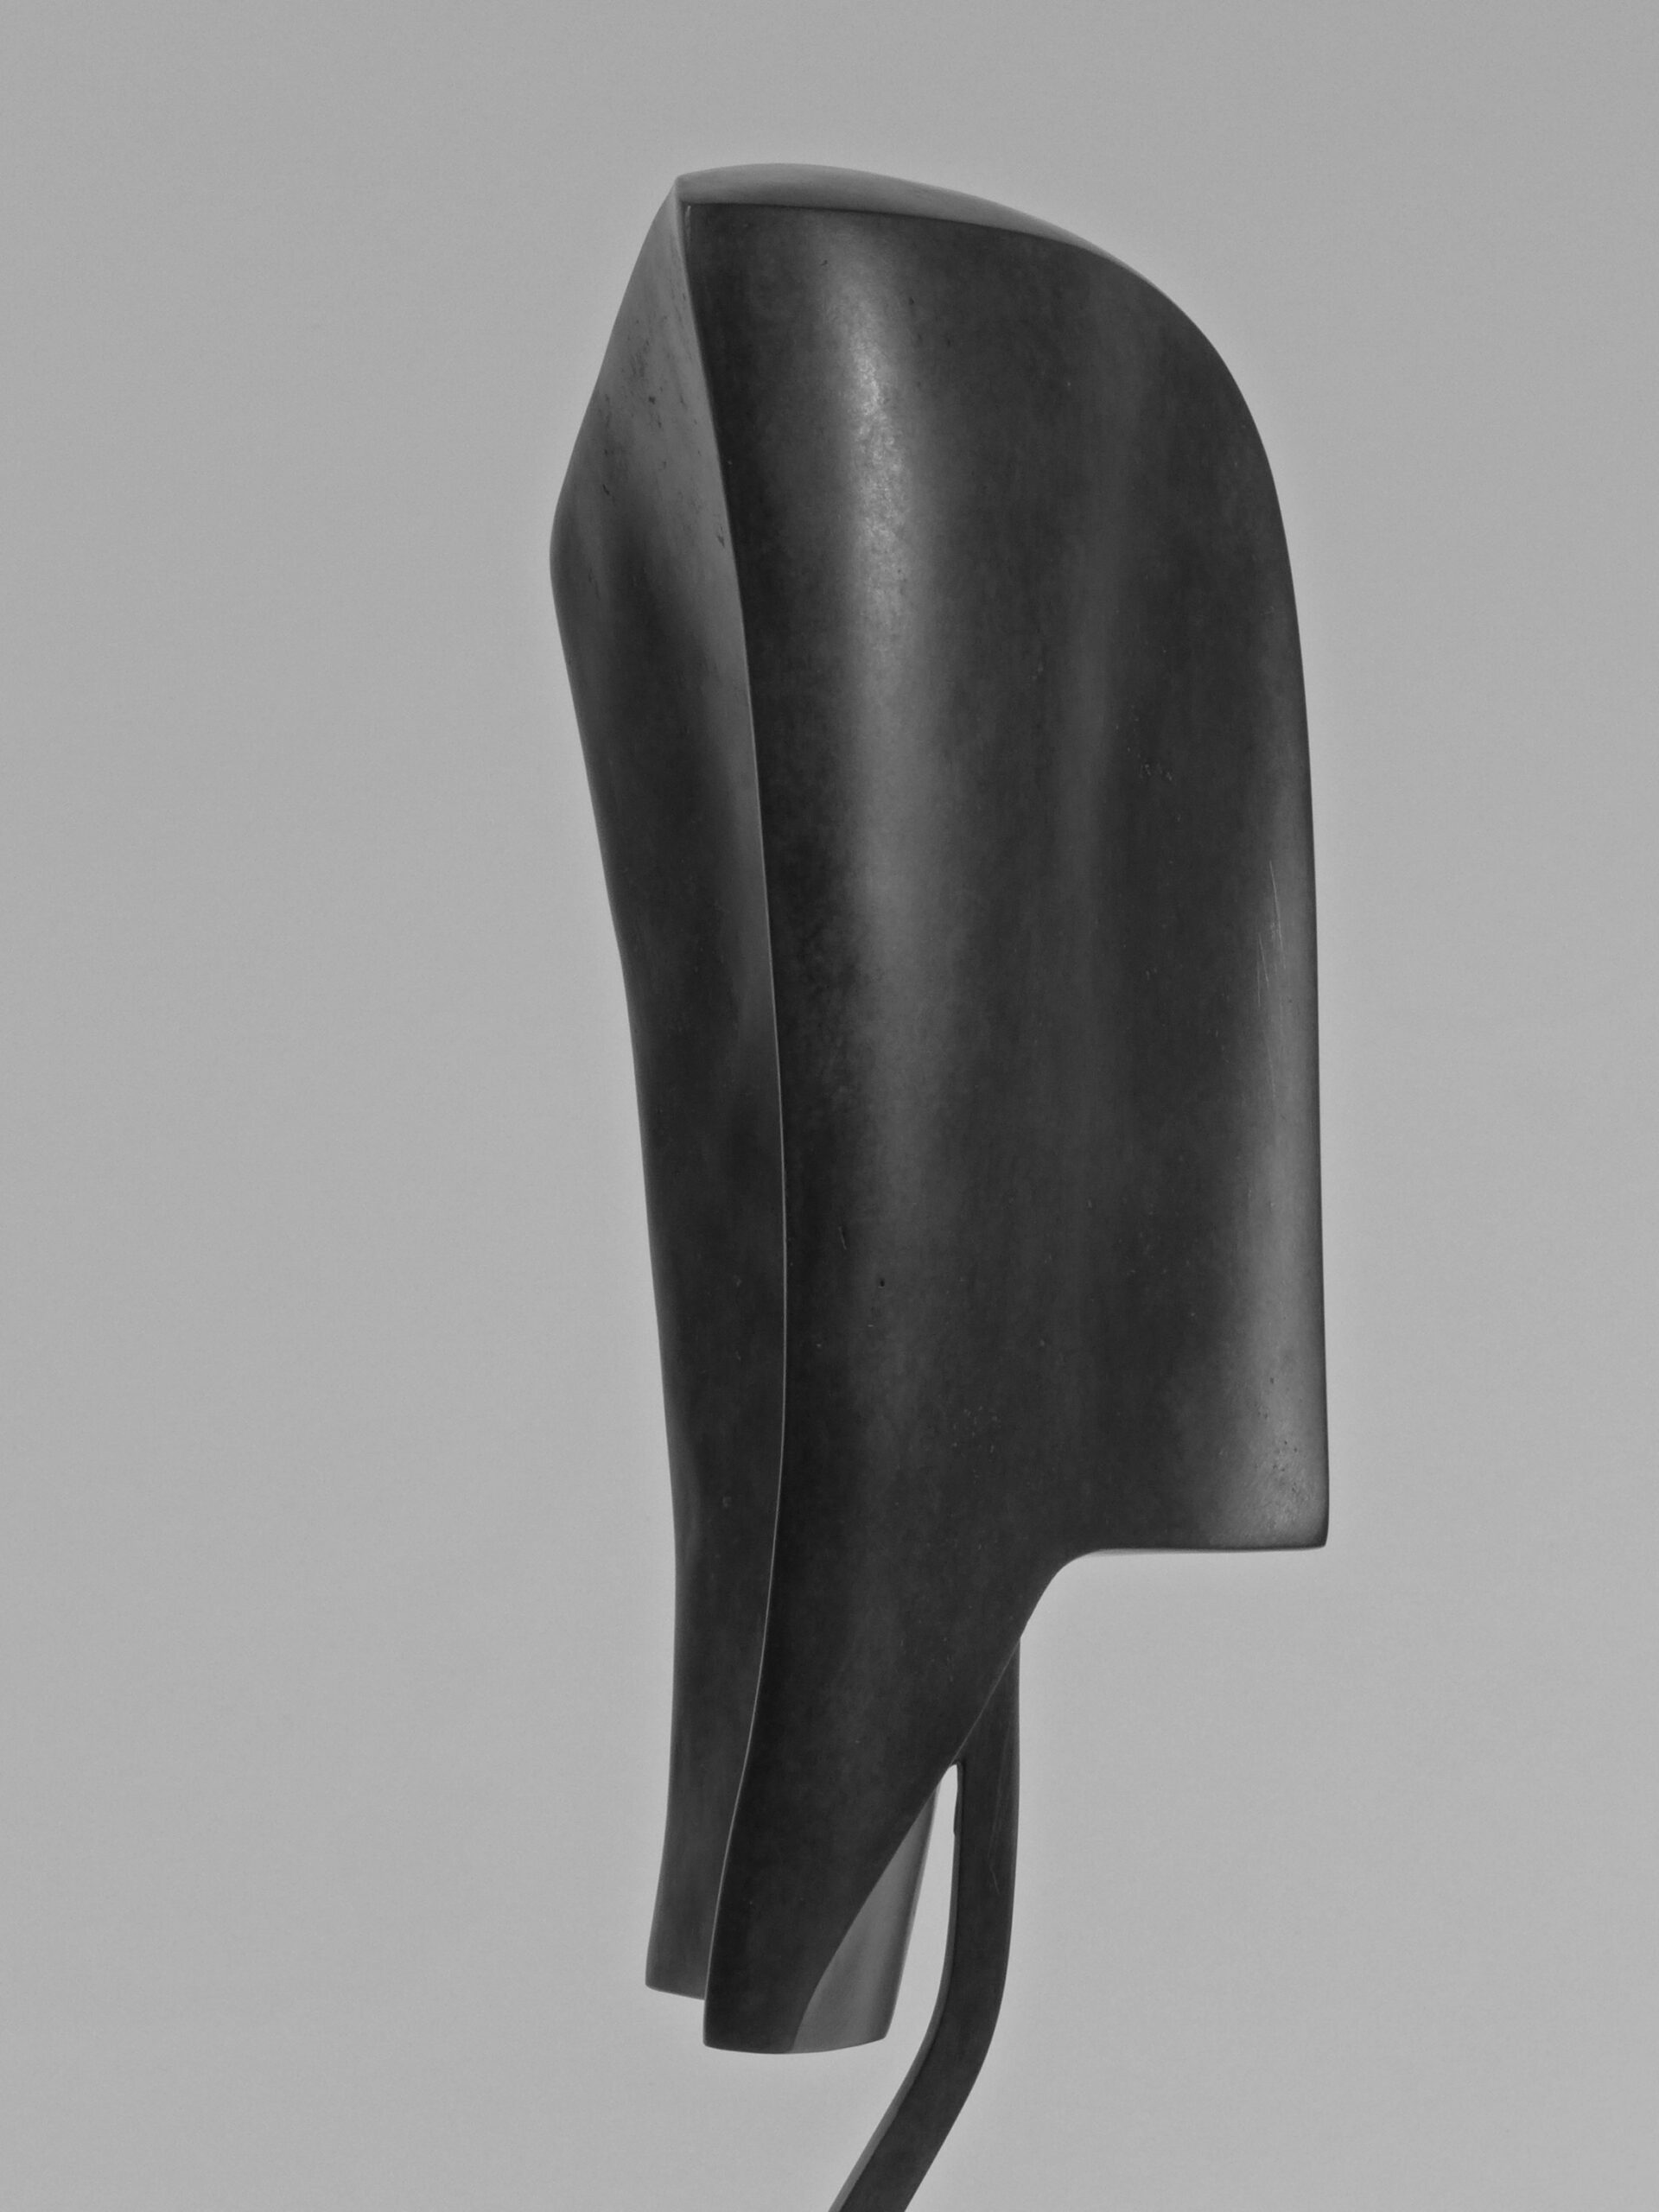 11 La Gourmandise, 1986, bronze, h 64 cm